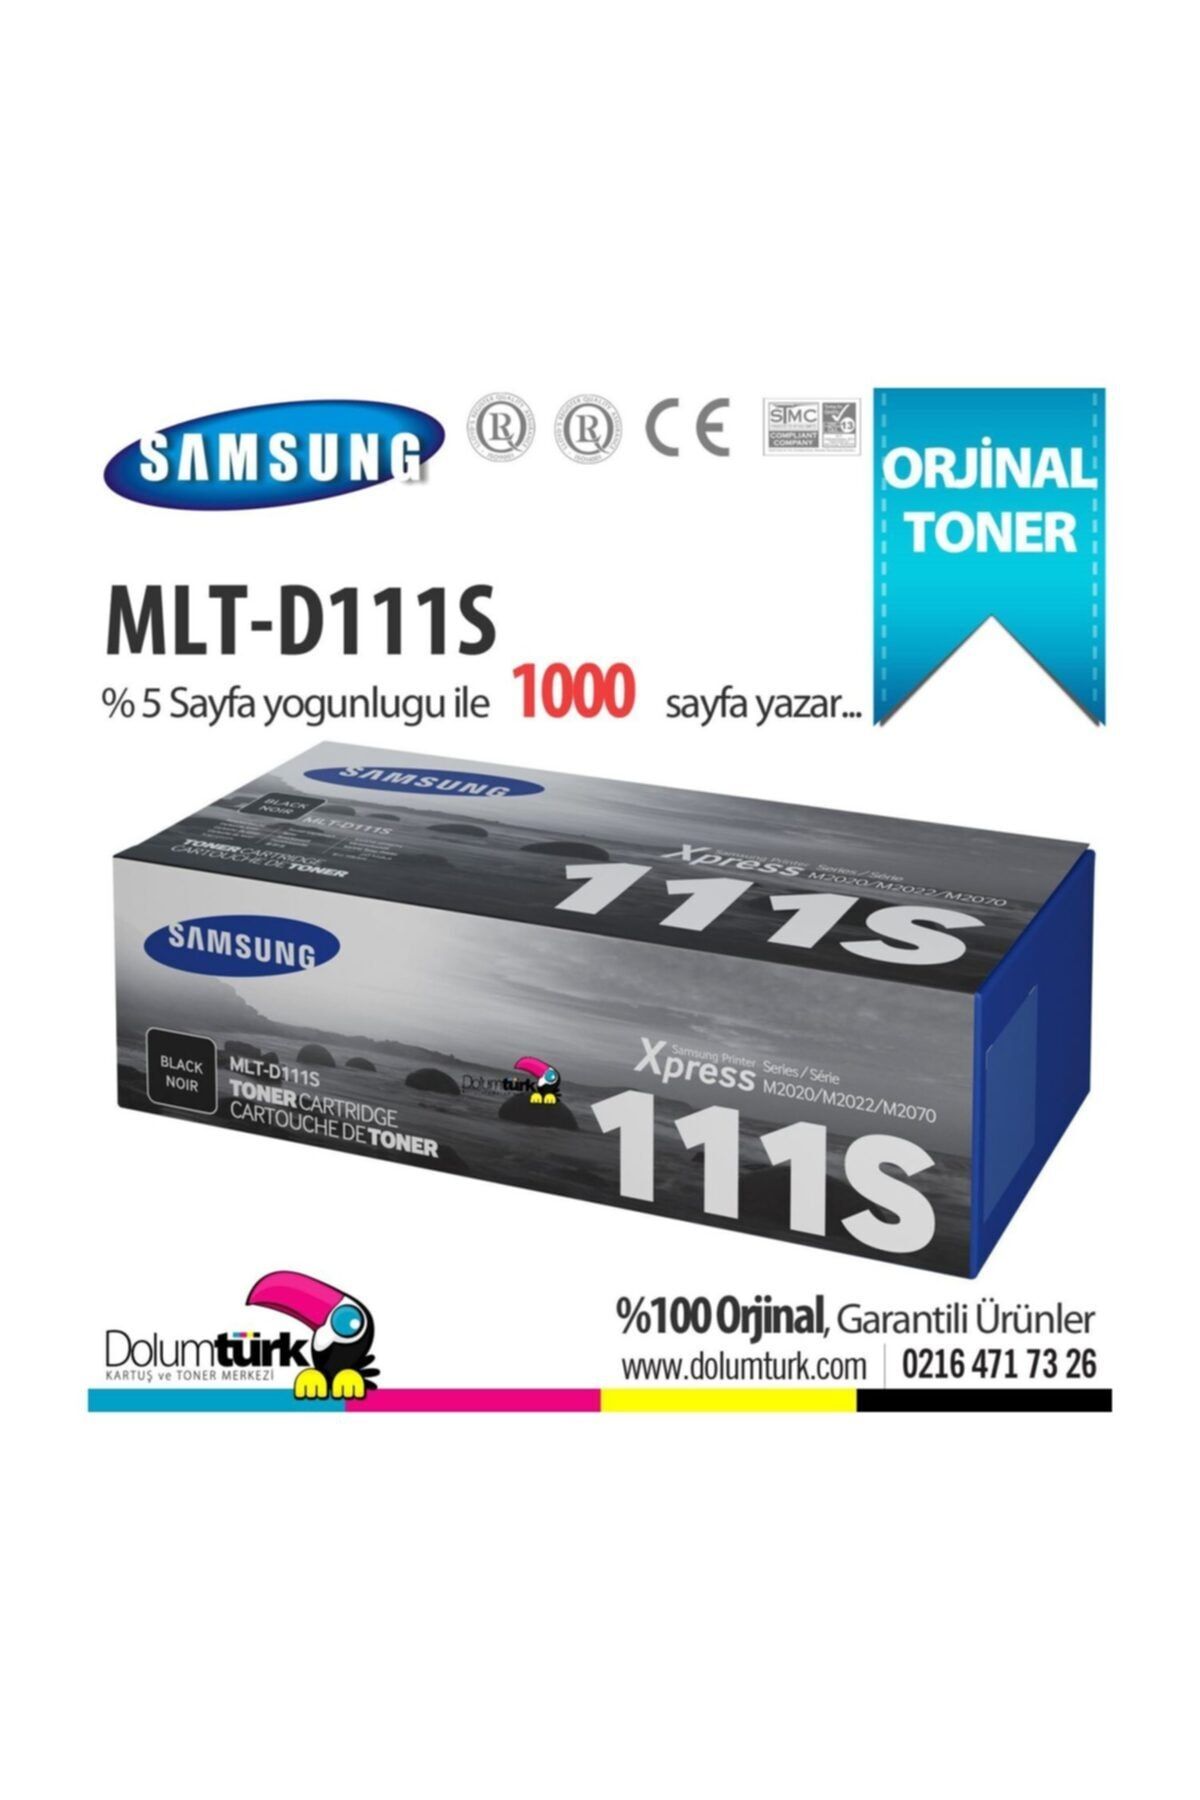 Samsung Mlt-d111s / Xpress M2020 / M2022 / M2070 Orjinal Toner